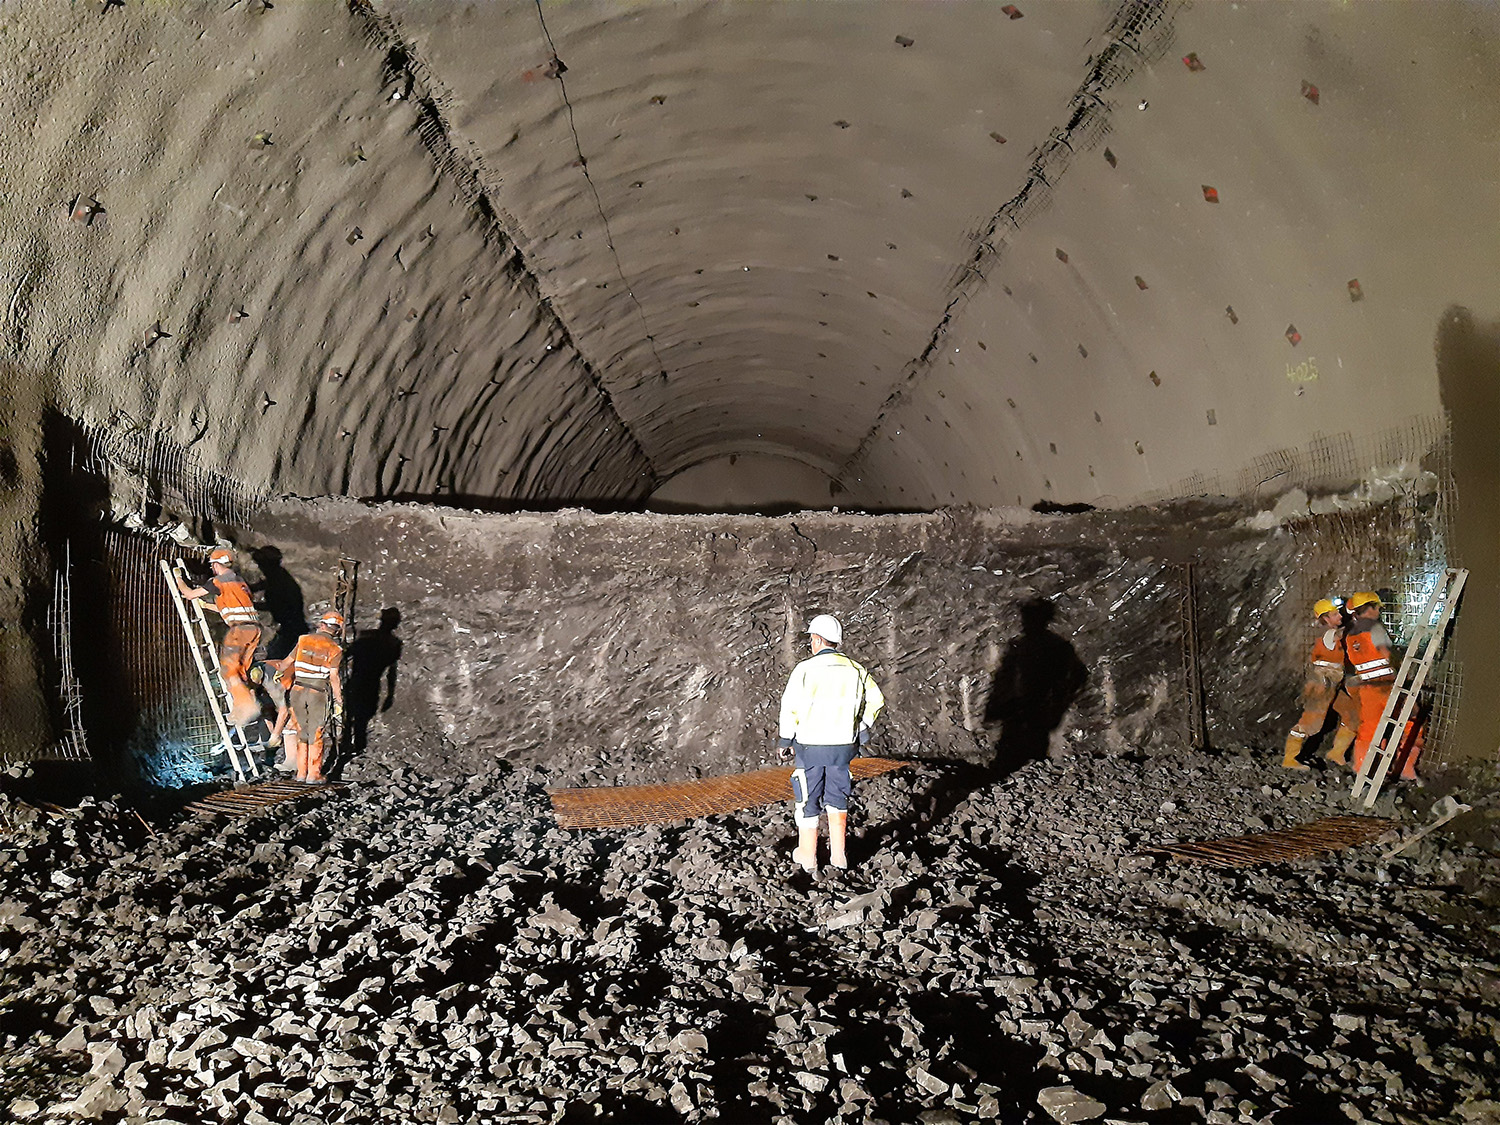 Karawankentunnel, Rosenthal - Tunnel construction